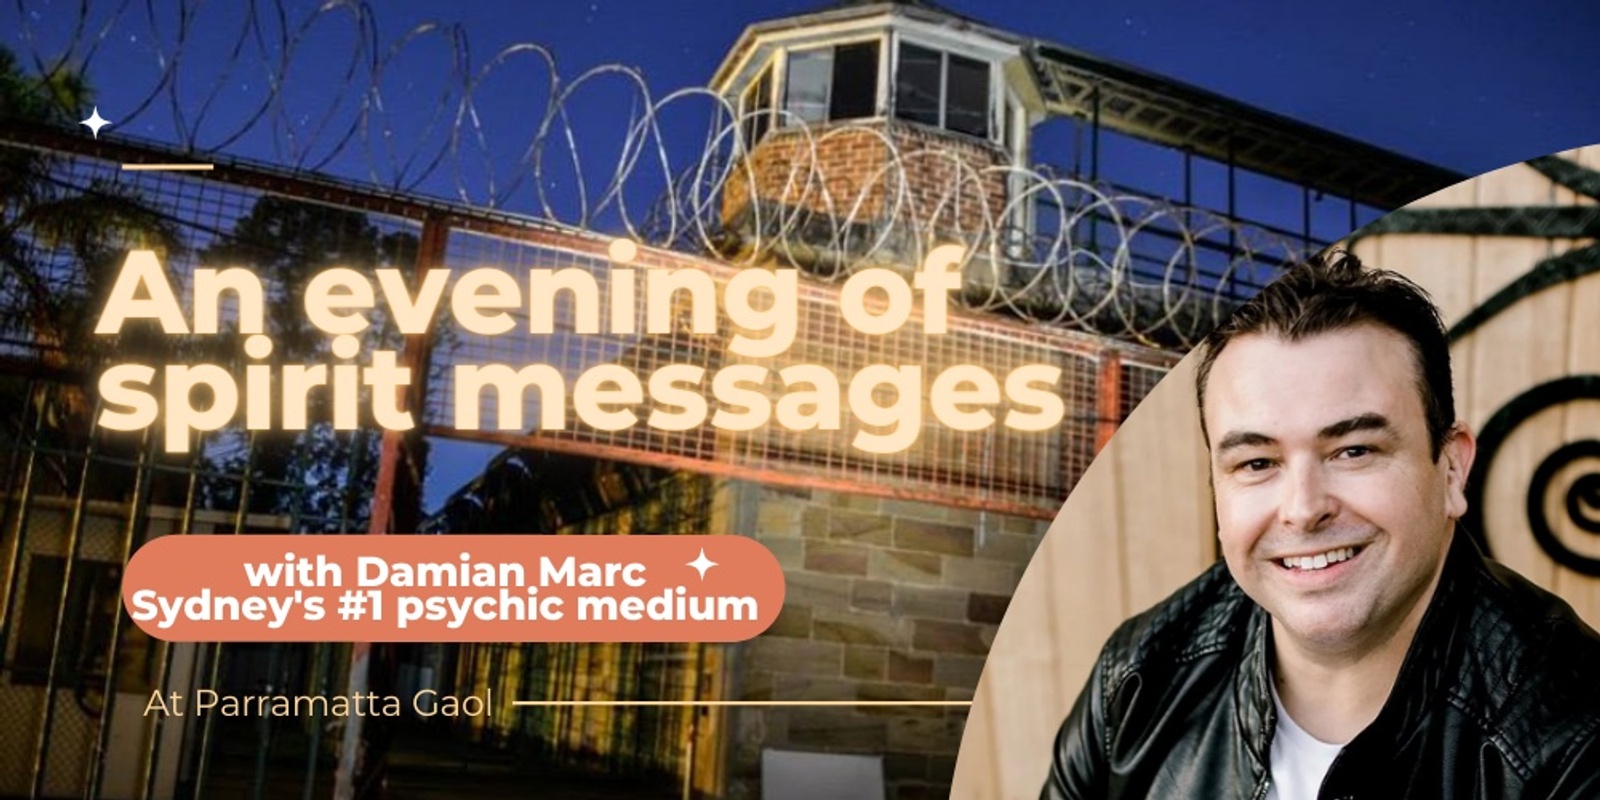 Banner image for An evening of spirt messages with Damian Marc - Parramatta Gaol